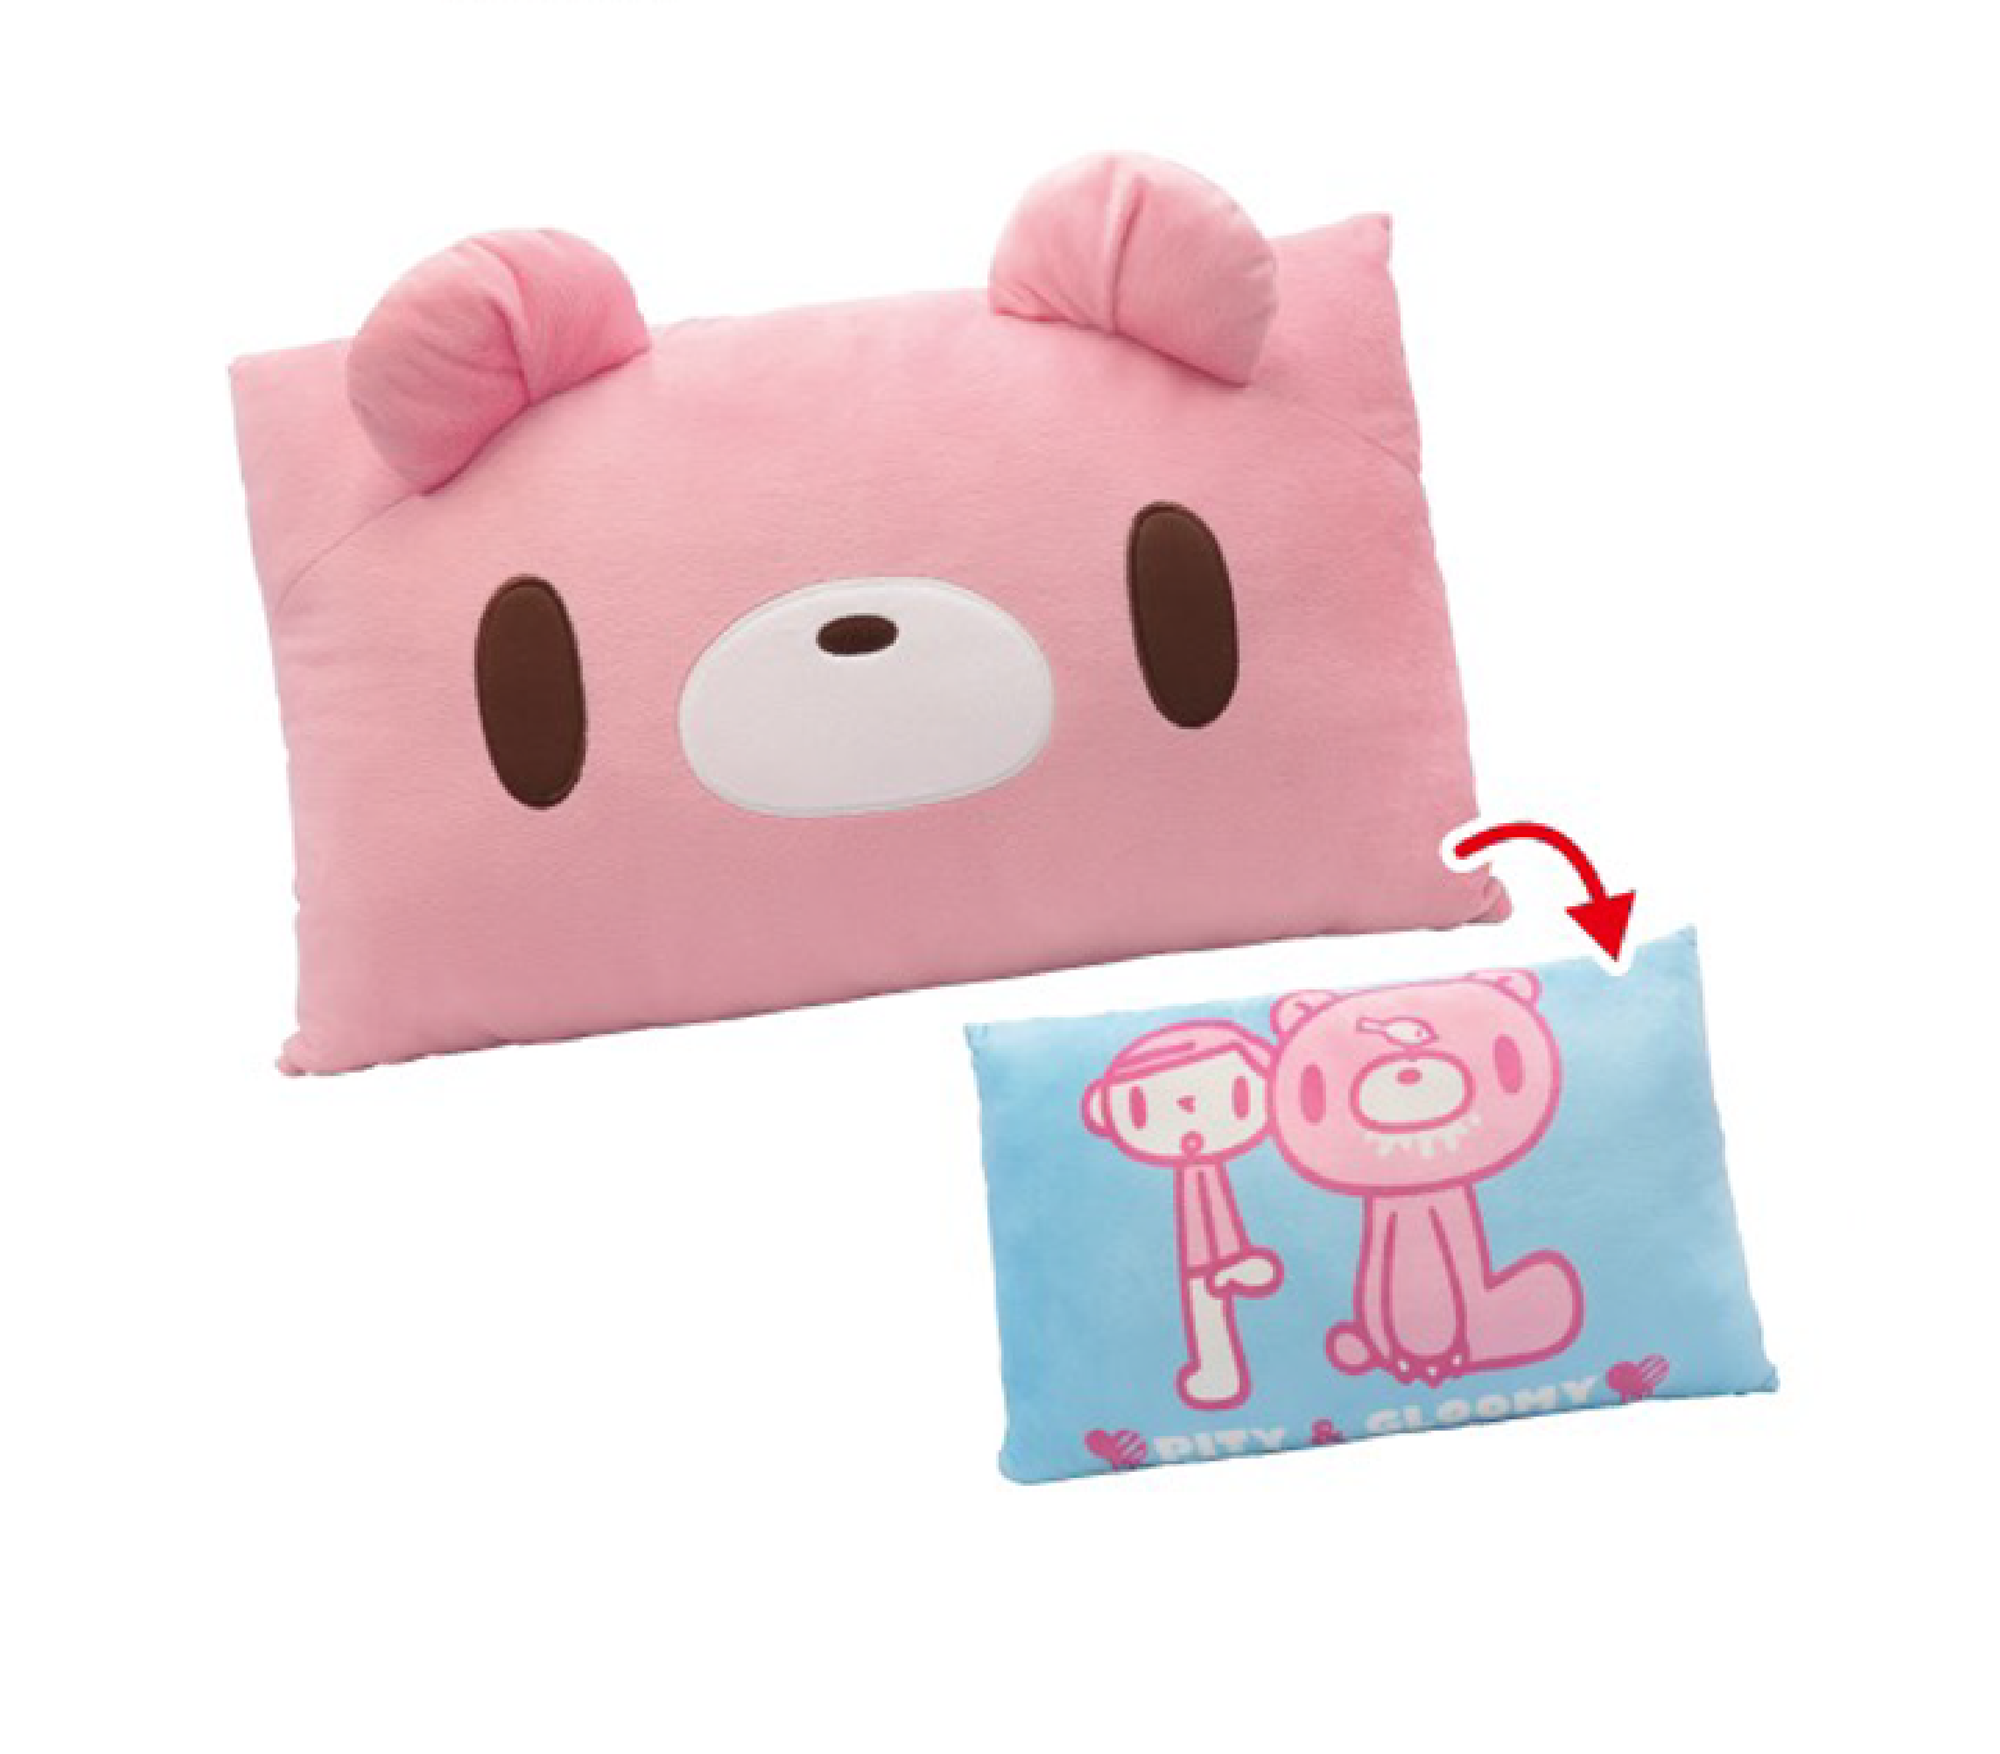 Gloomy Bear Chax Taito Character Soft Pillow - B